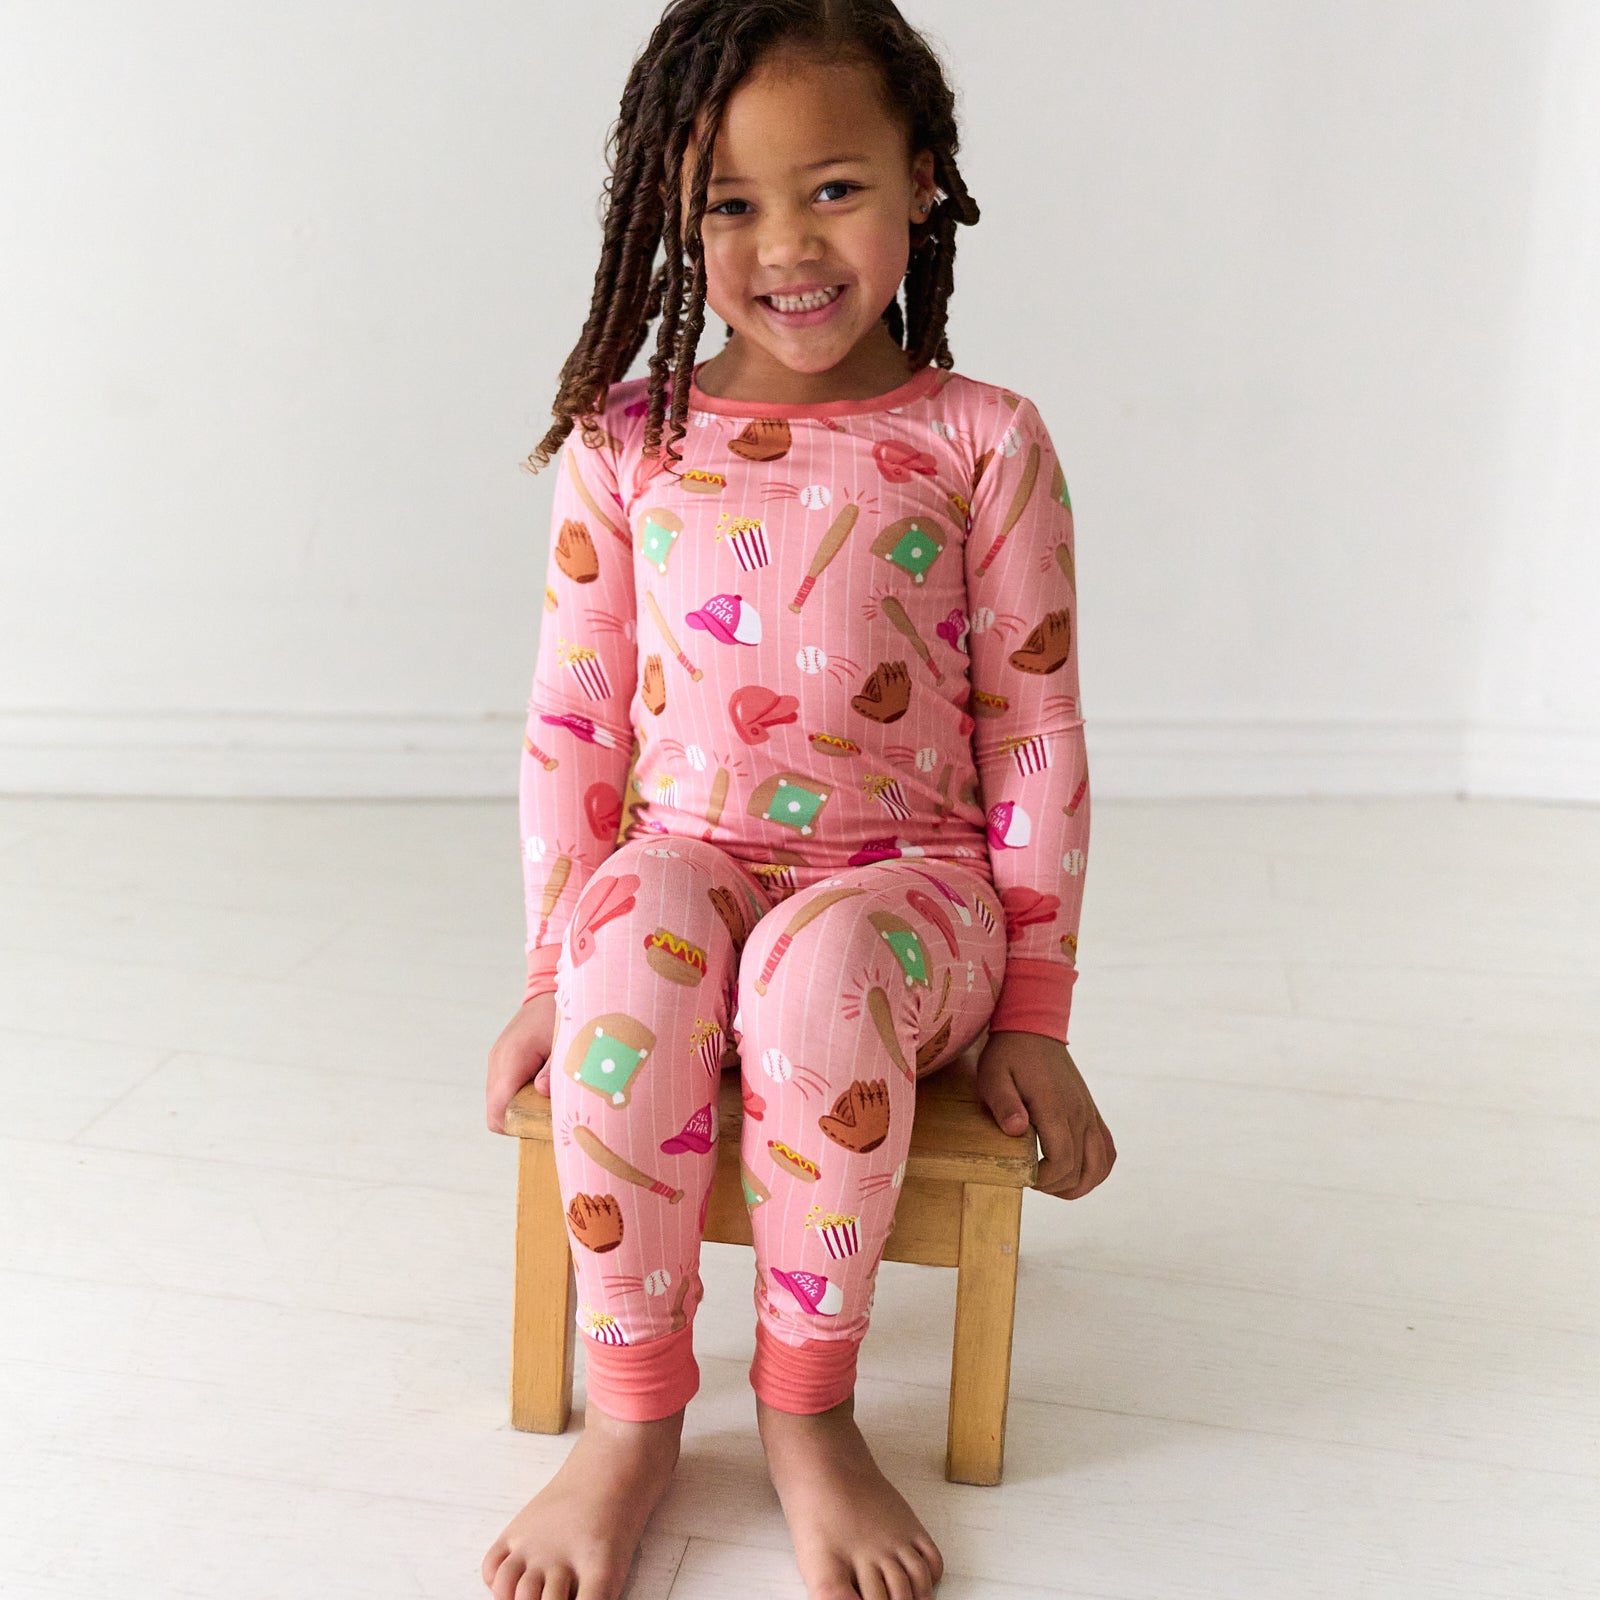 Child sitting wearing a Pink All Stars printed two piece pajama set